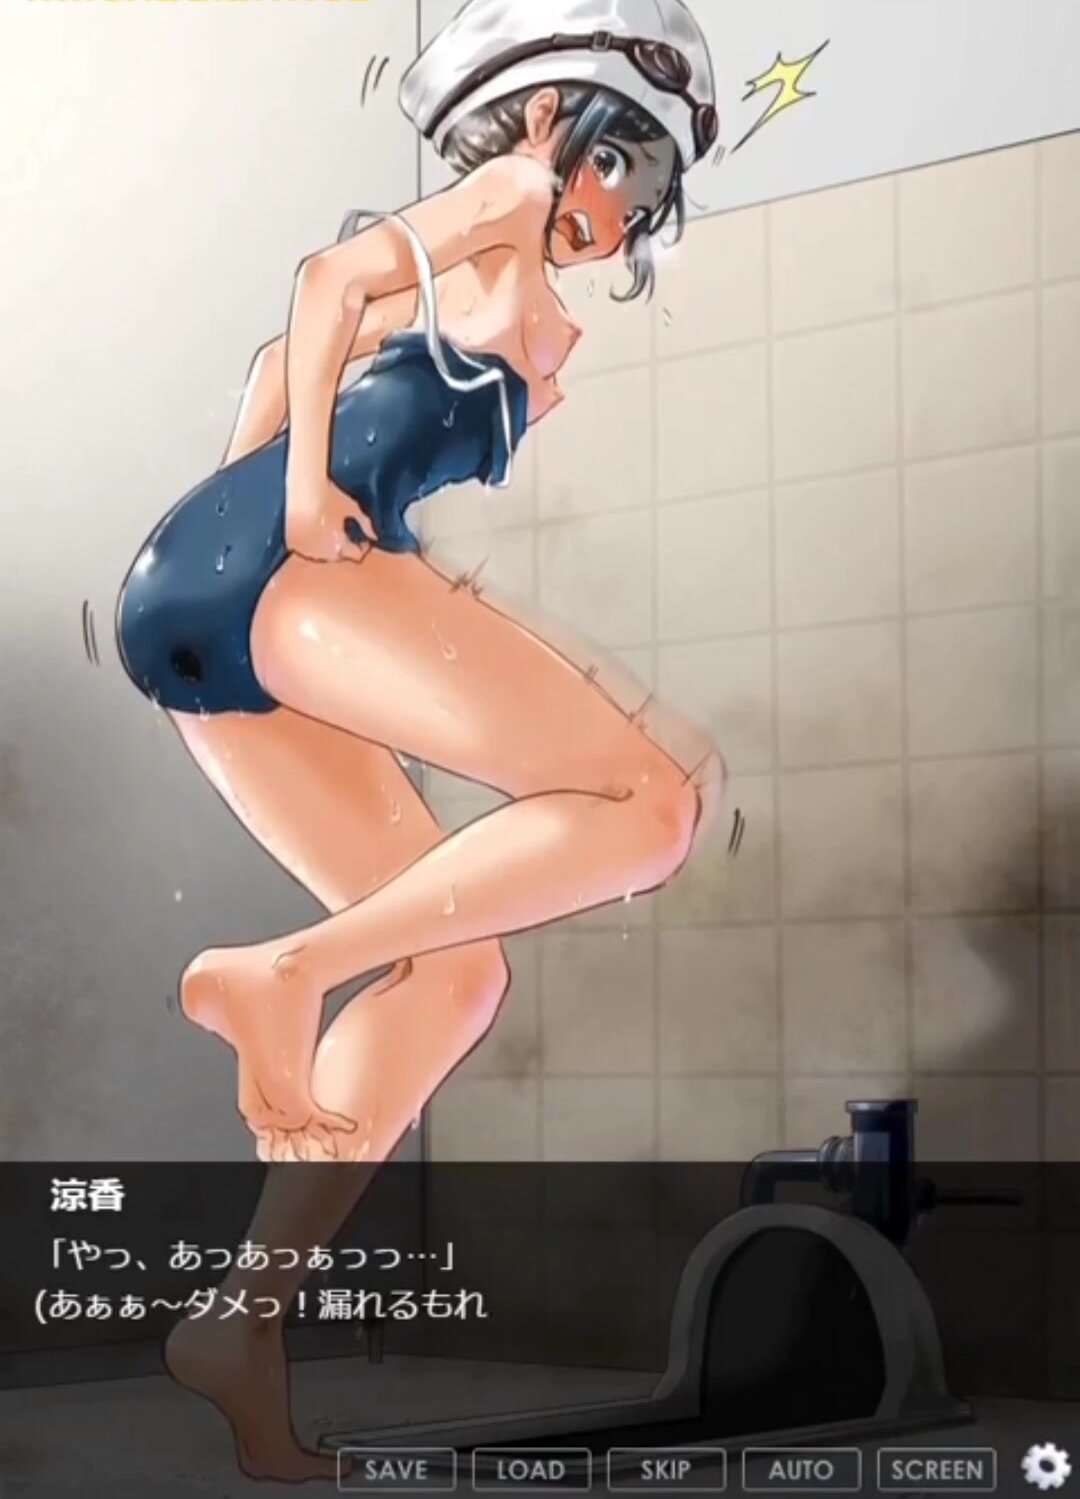 Anime girl swimmer diarrhea